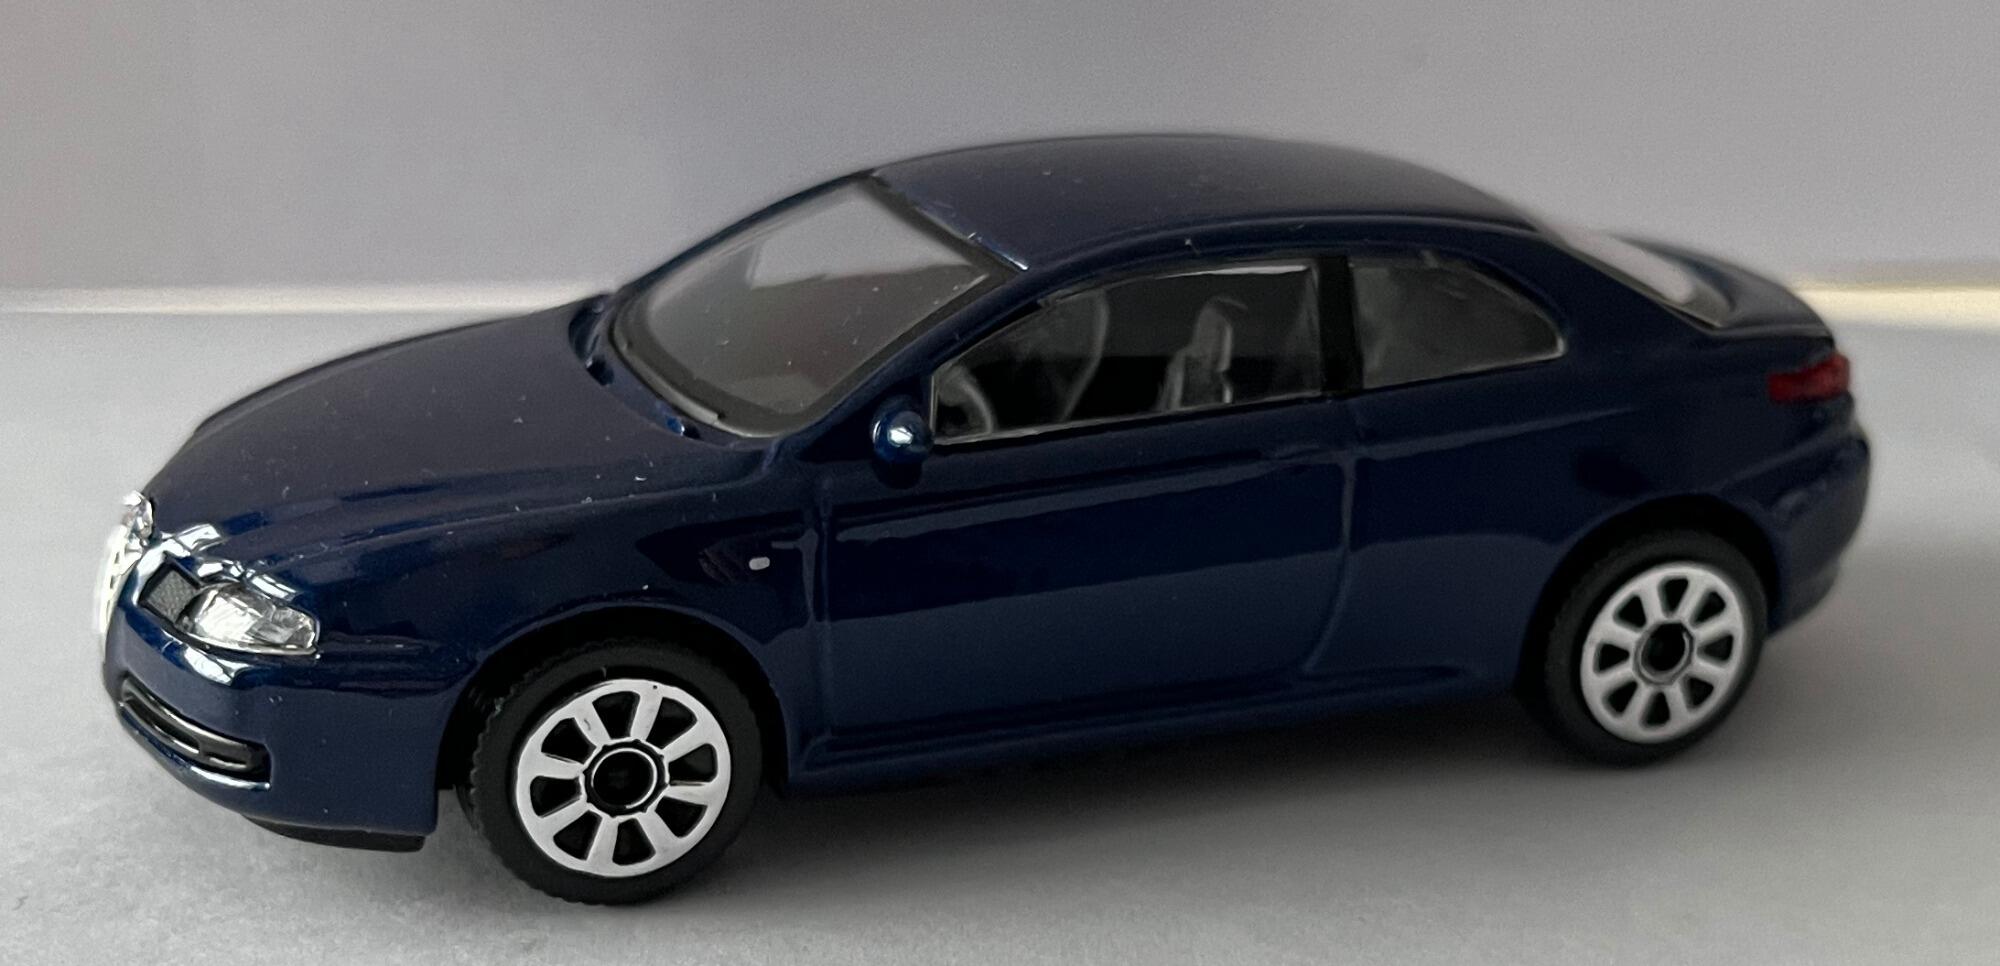 Alfa Romeo GT 2003 in dark blue, 1:43 scale diecast car model from Bburago, streetfire, 18-30180B